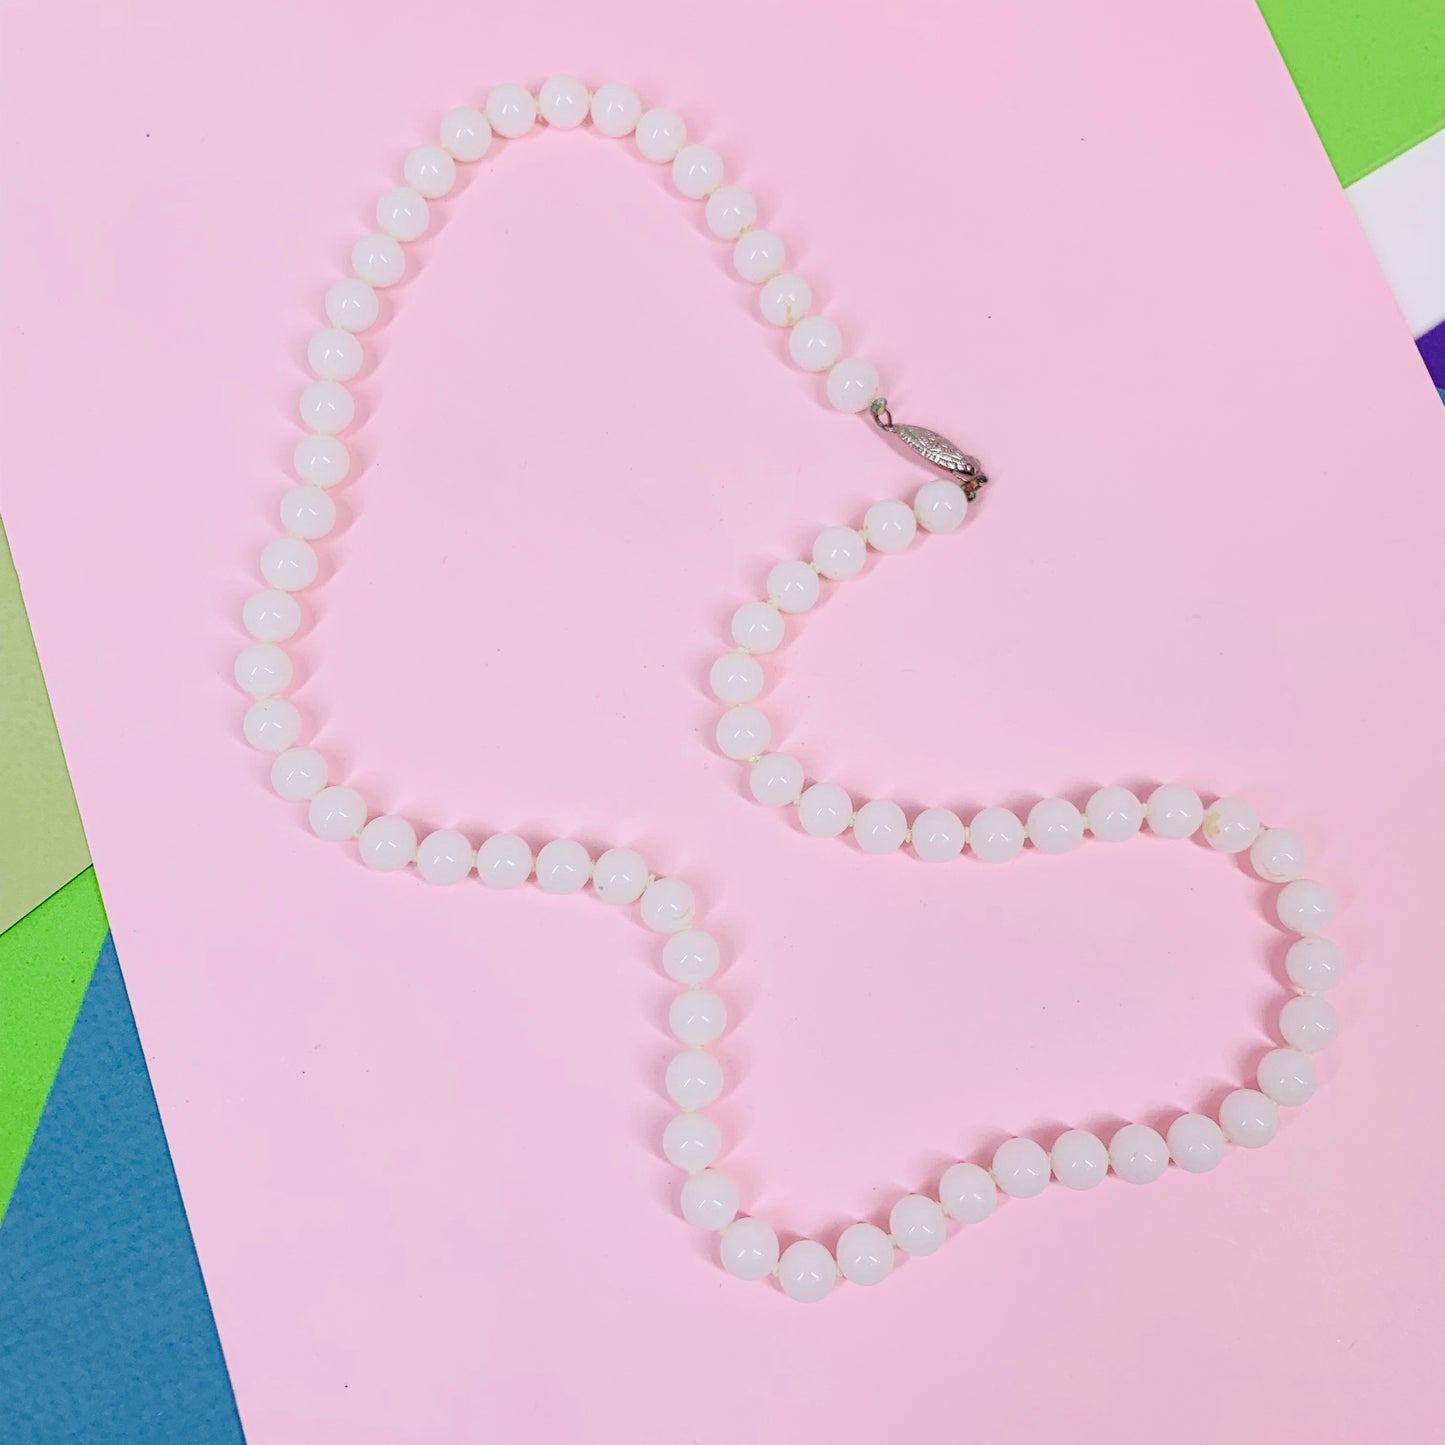 1960s Avon costume white beads necklace